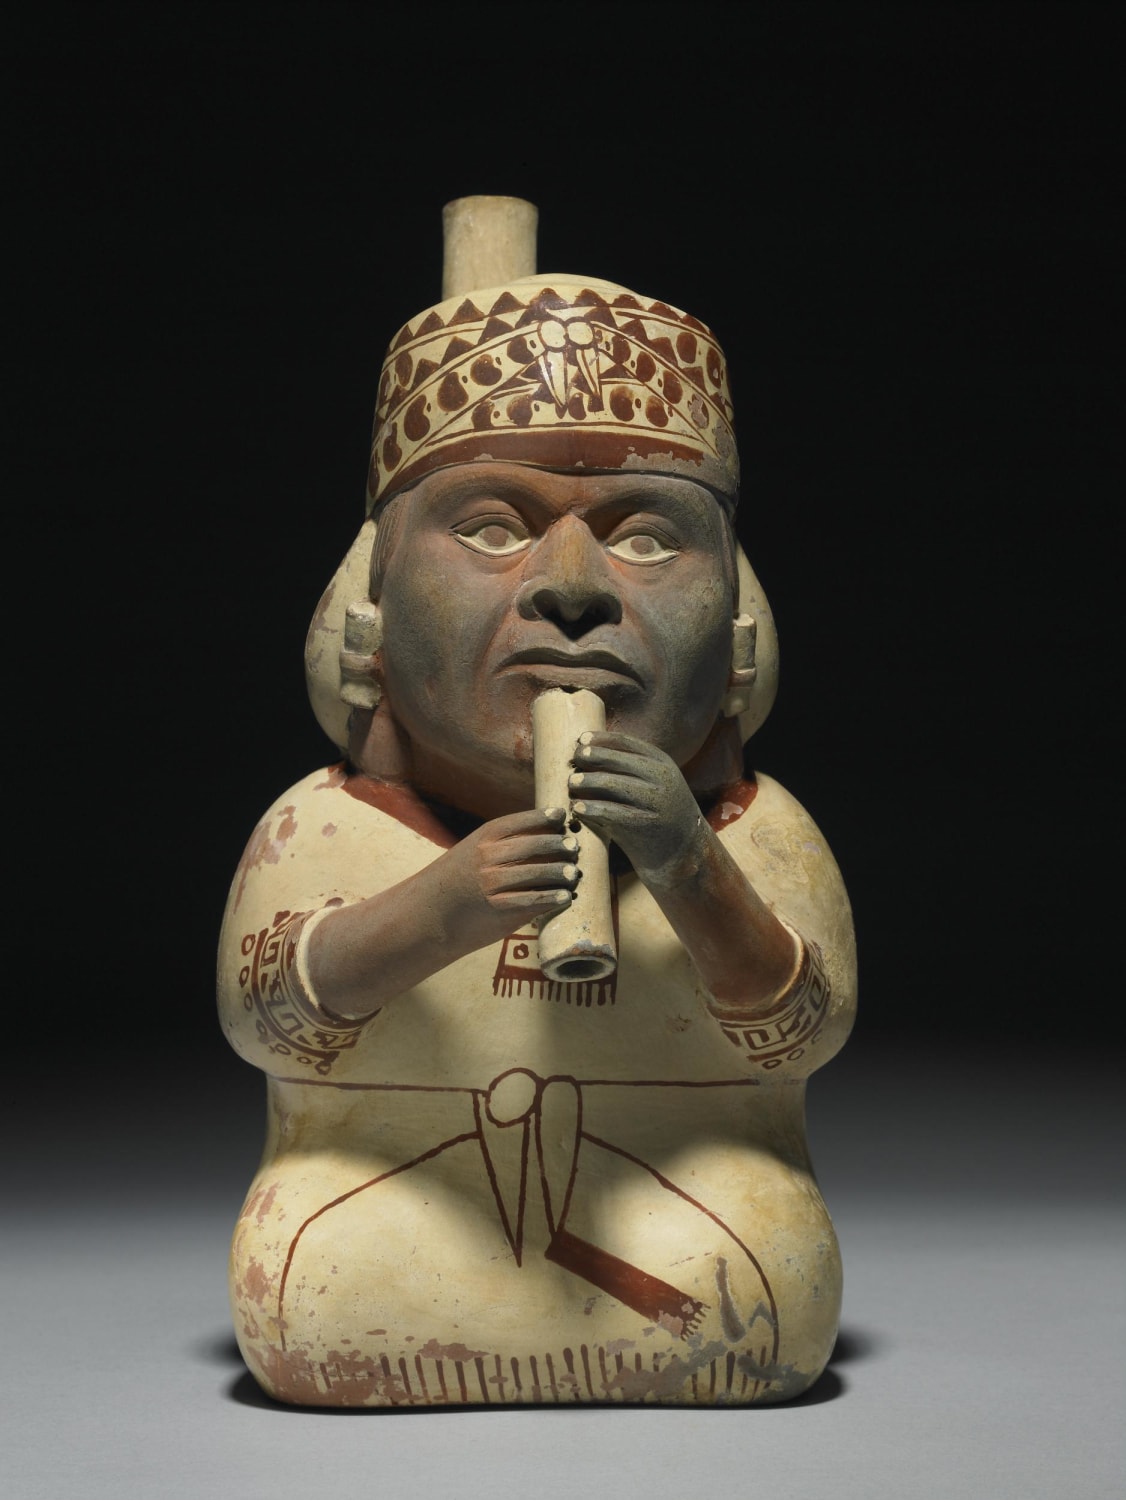 Seated man playing flute. Ceramic, Moche, Peru, 2nd-8th century